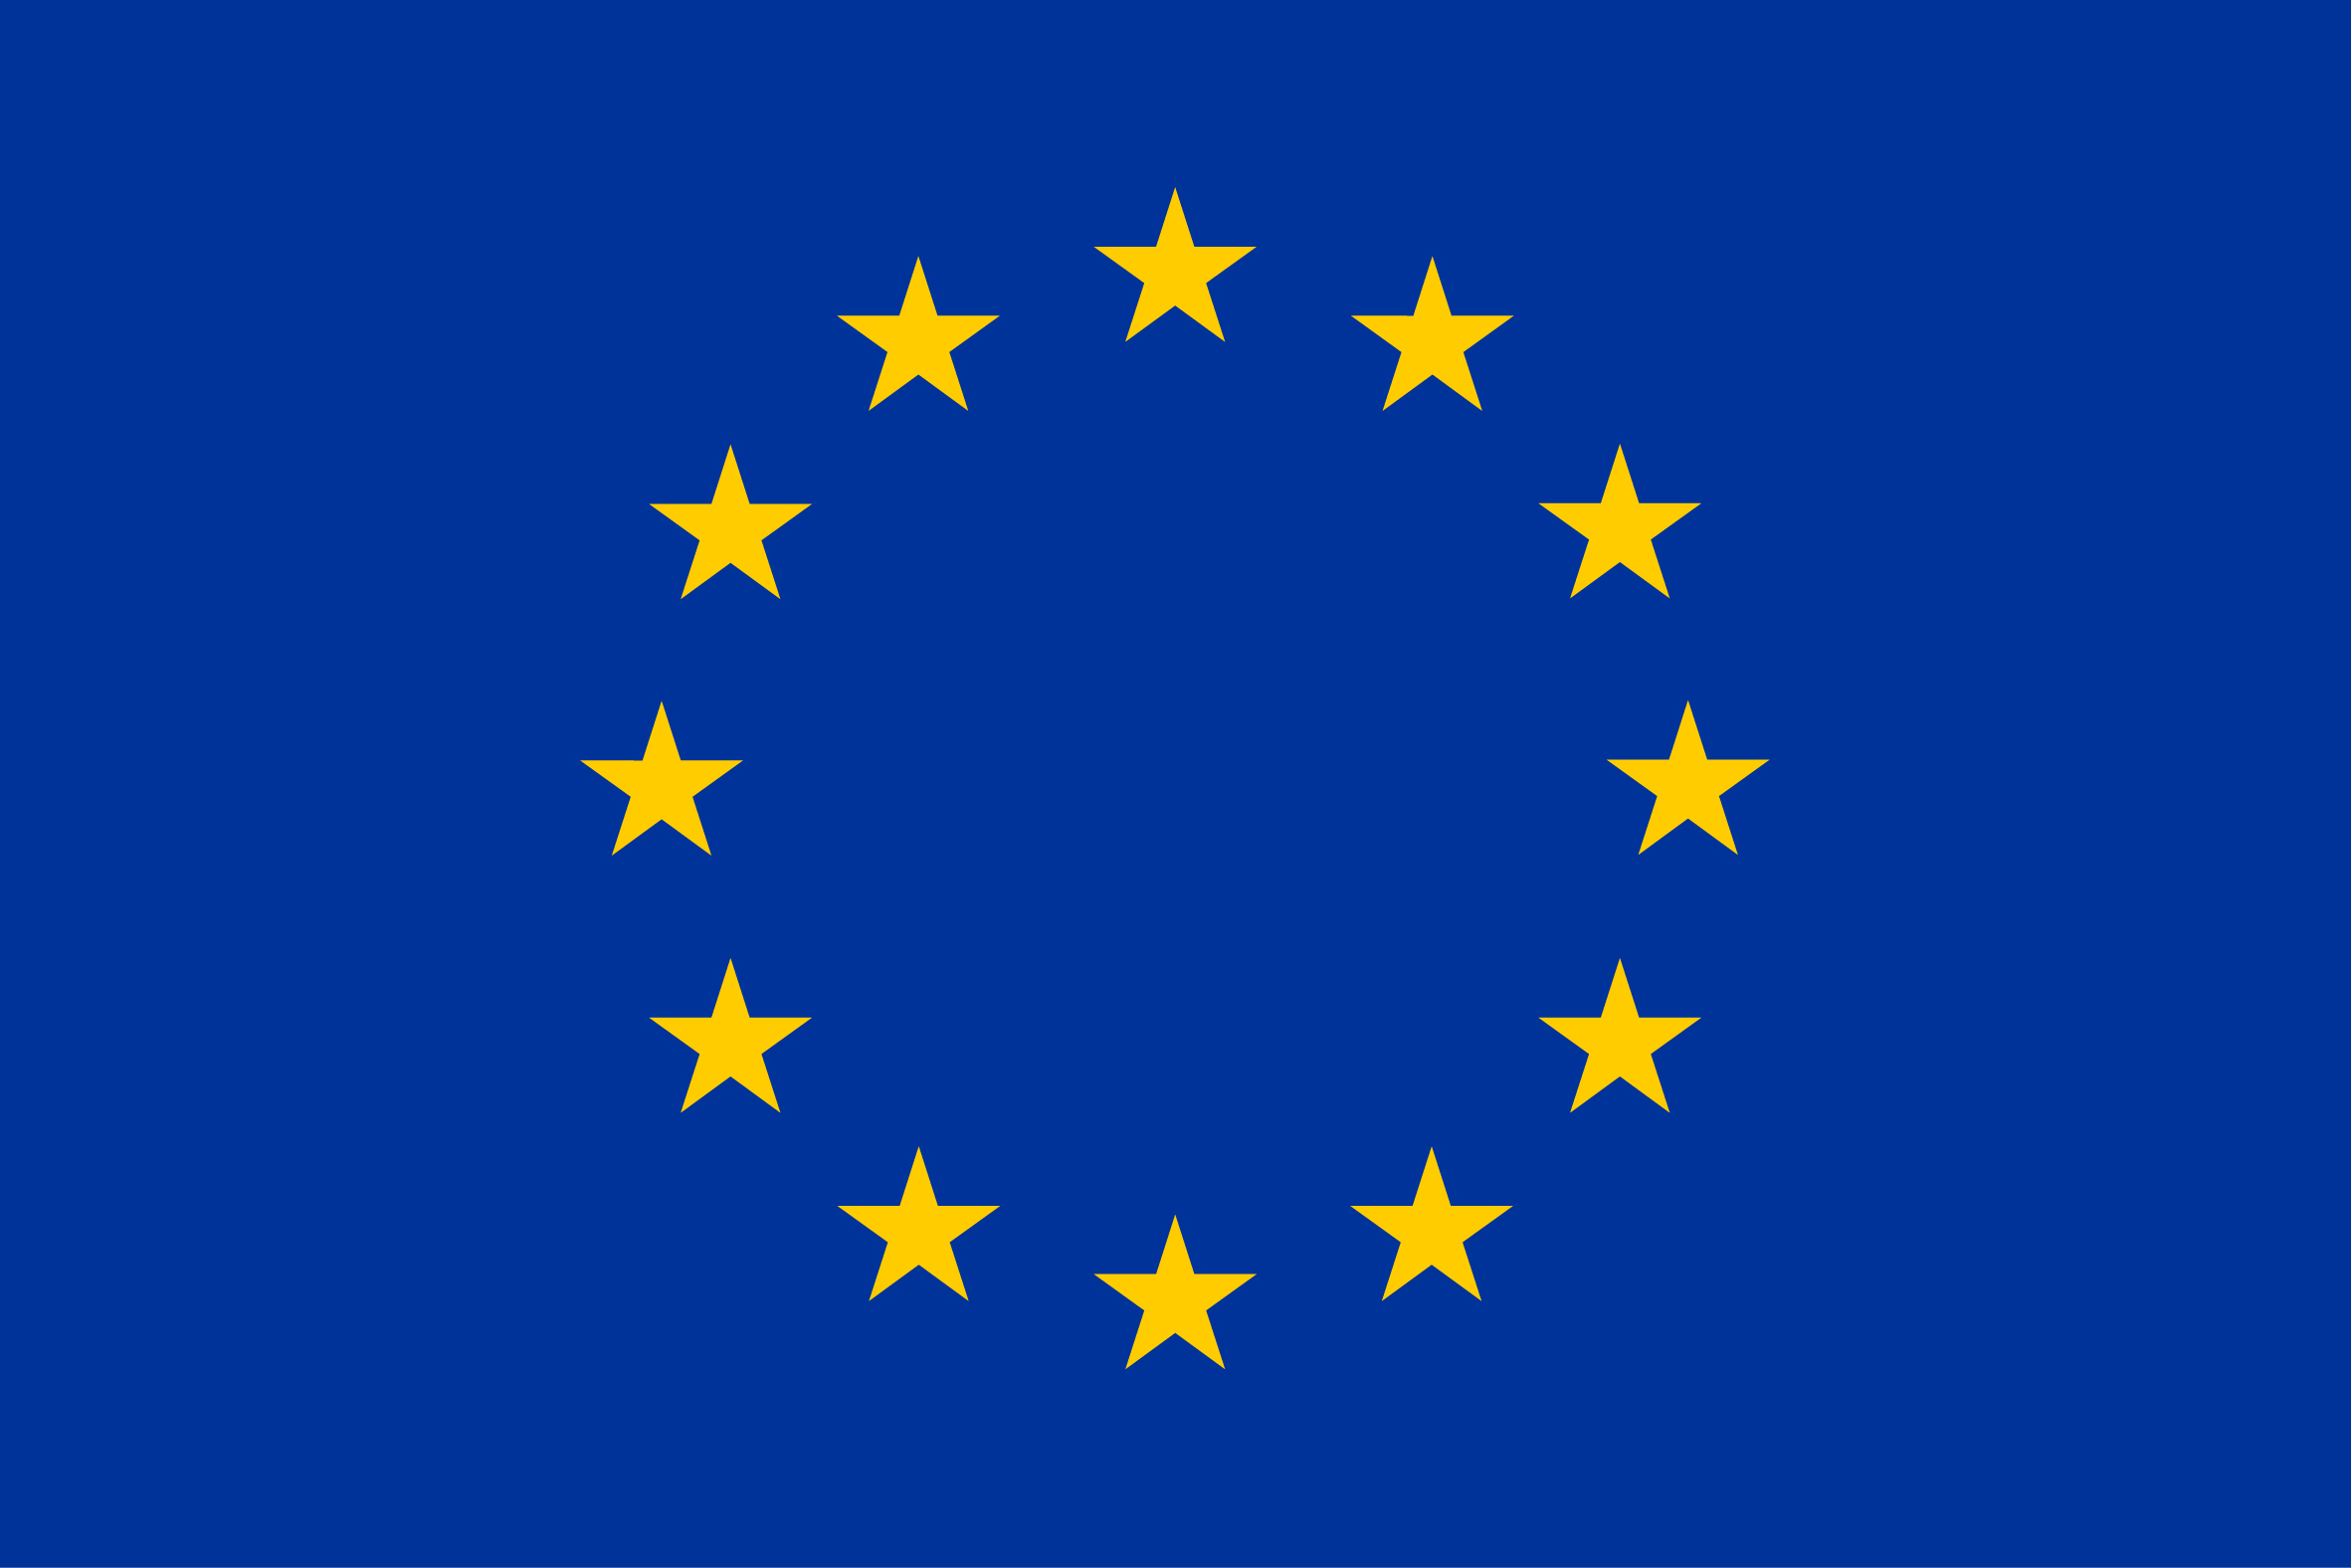 Copyright: https://europa.eu/european-union/sites/europaeu/files/docs/body/flag_yellow_high.jpg